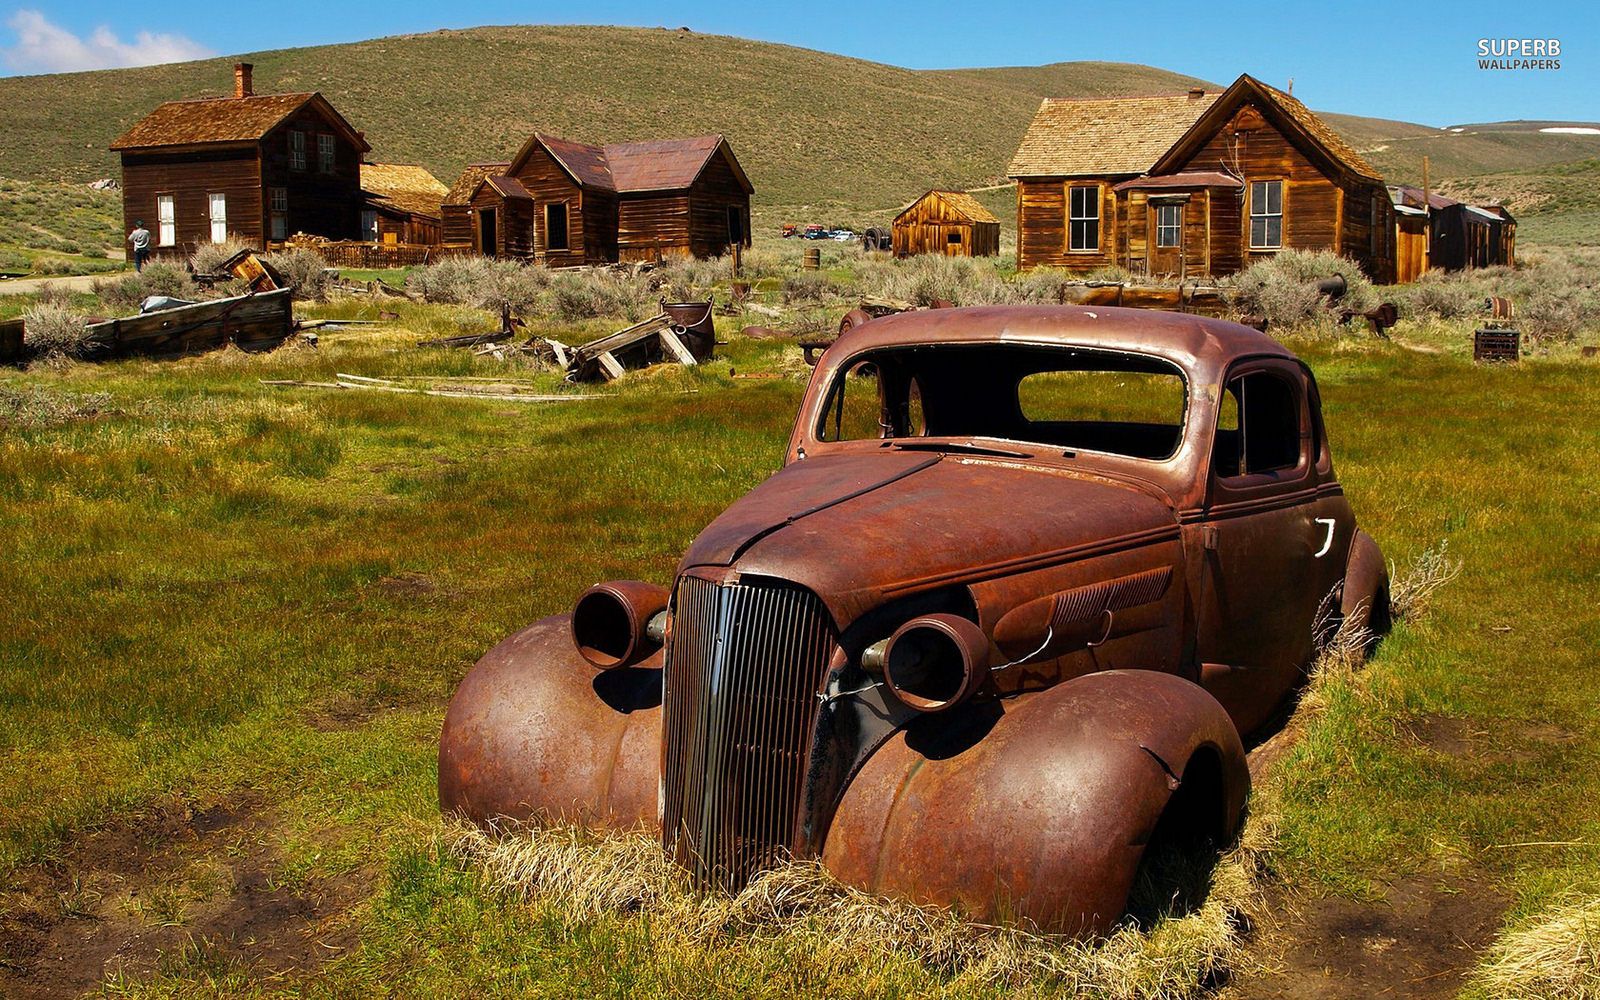 Rusty Old Car Wallpaper Pics. Rusty Cars, Old Cars, Car Wallpaper